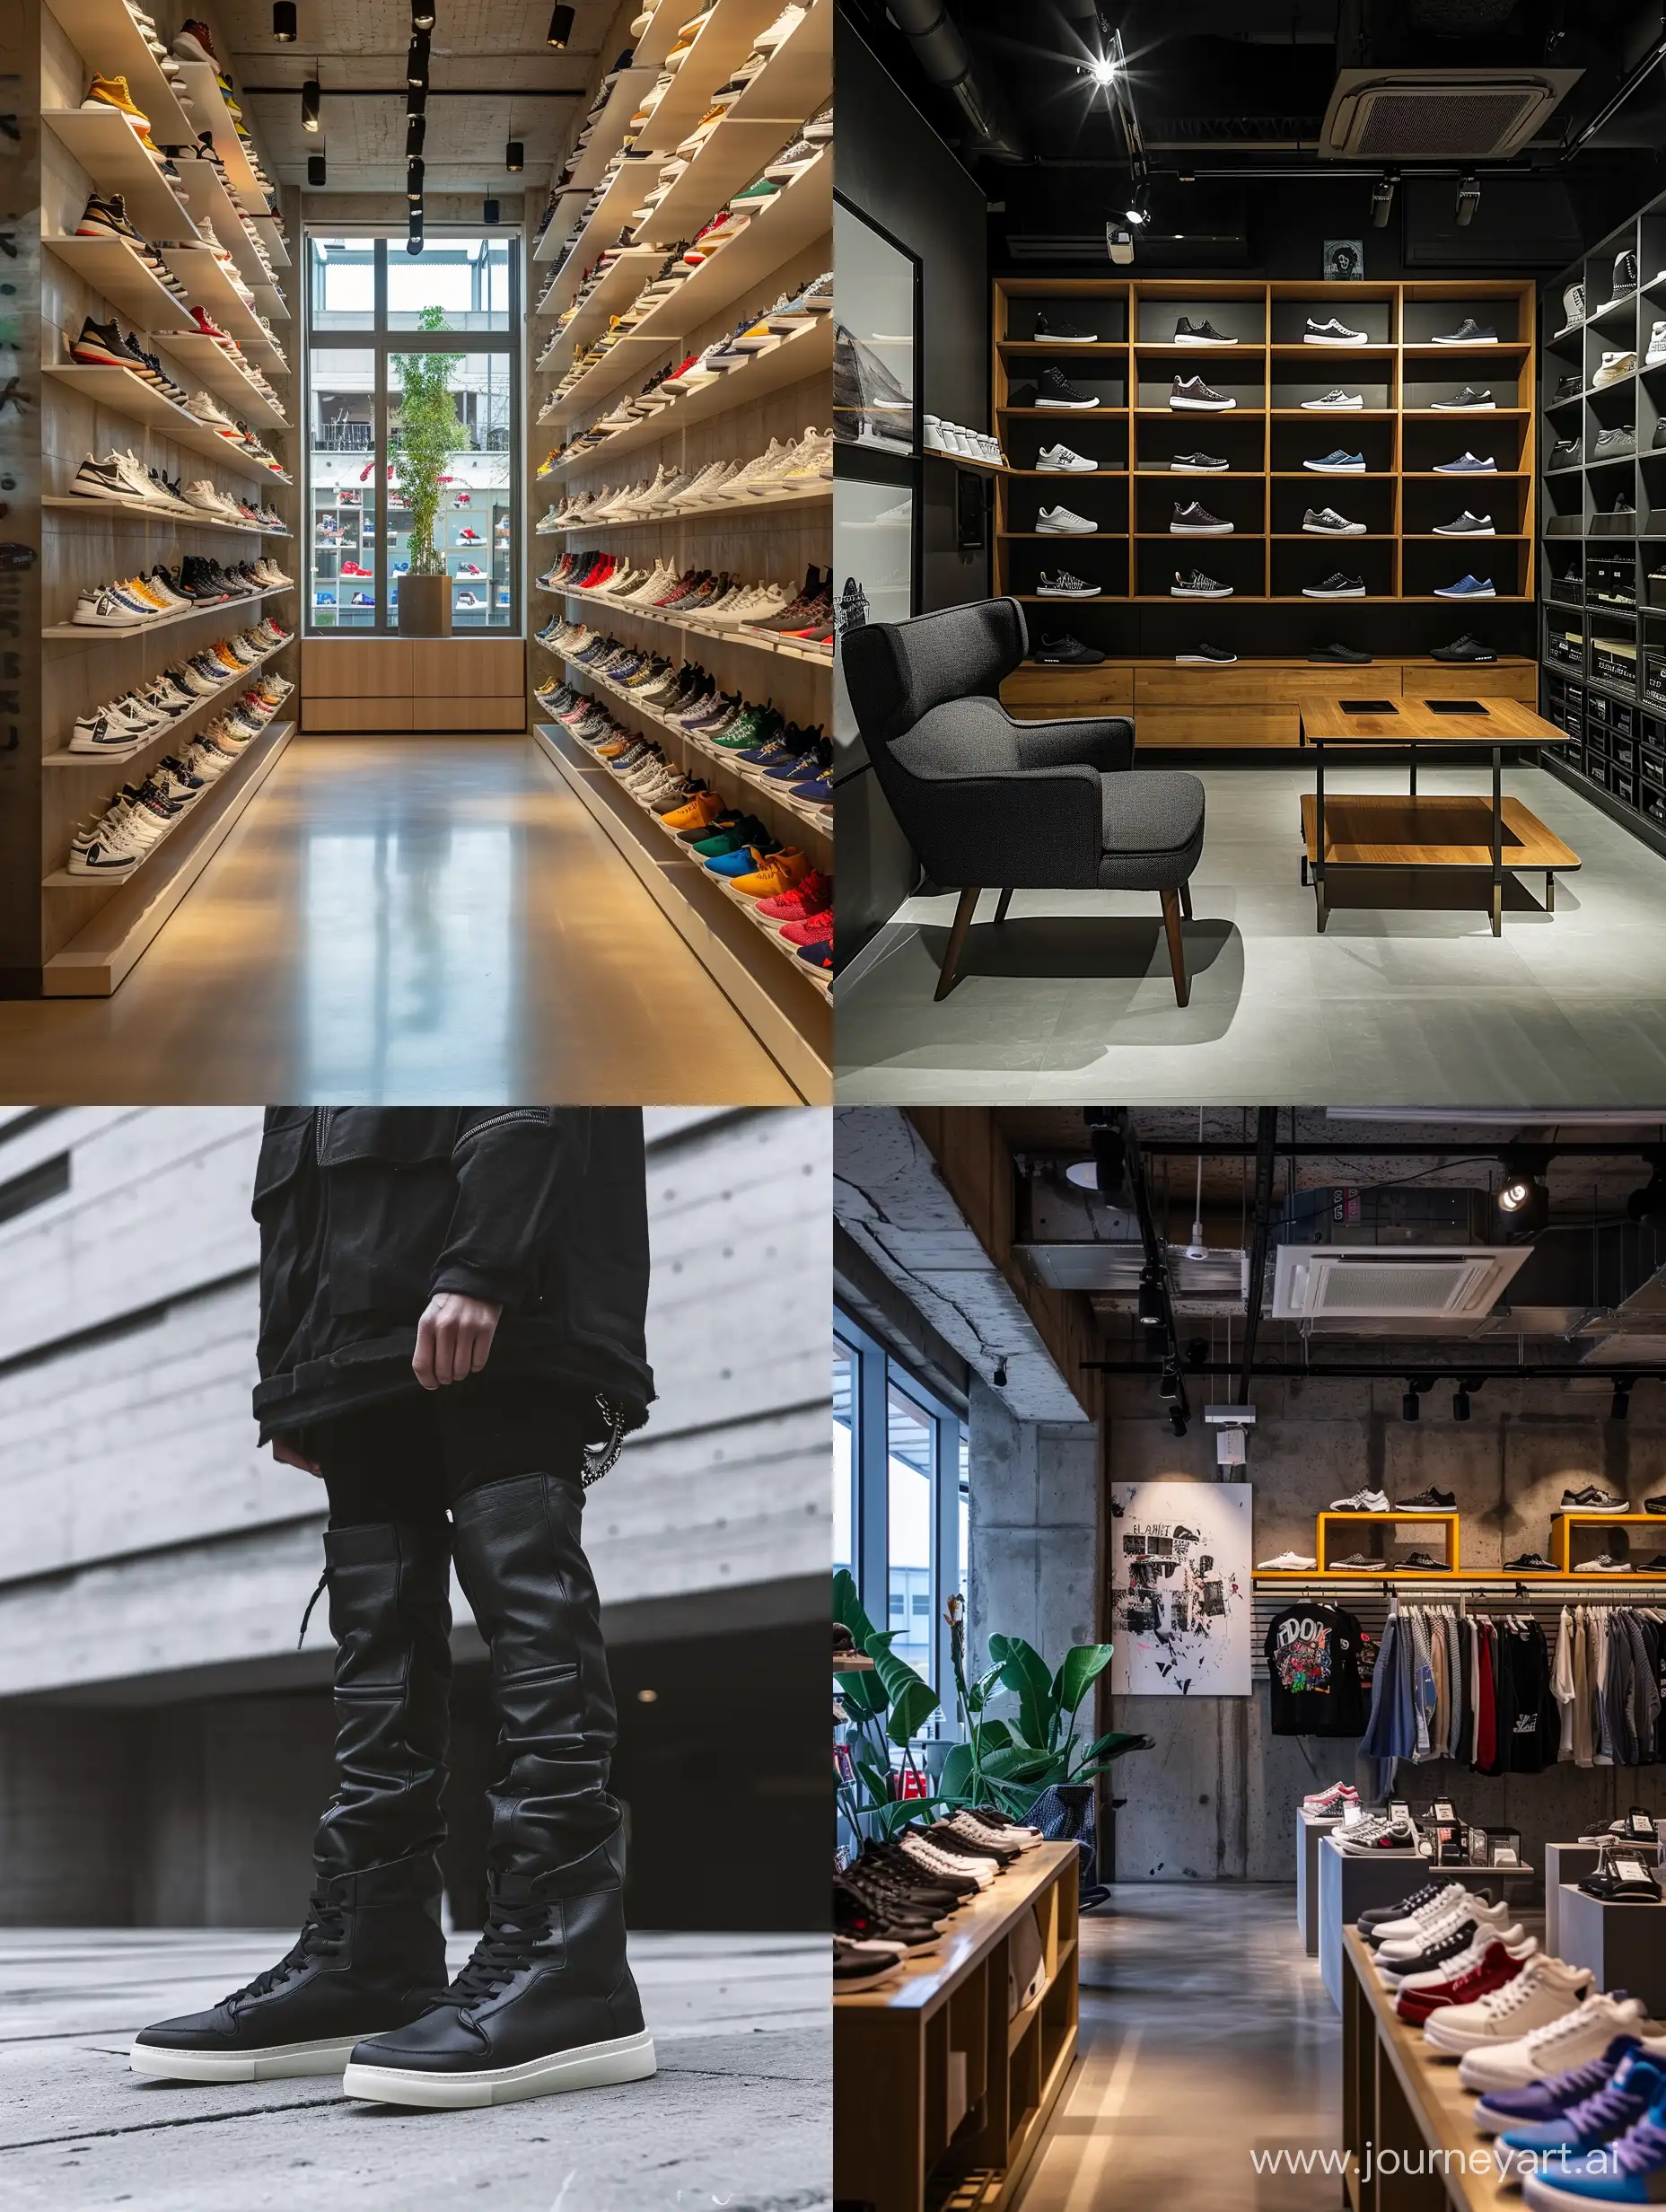 HODOK-Sneaker-Store-Interior-with-Vibrant-Atmosphere